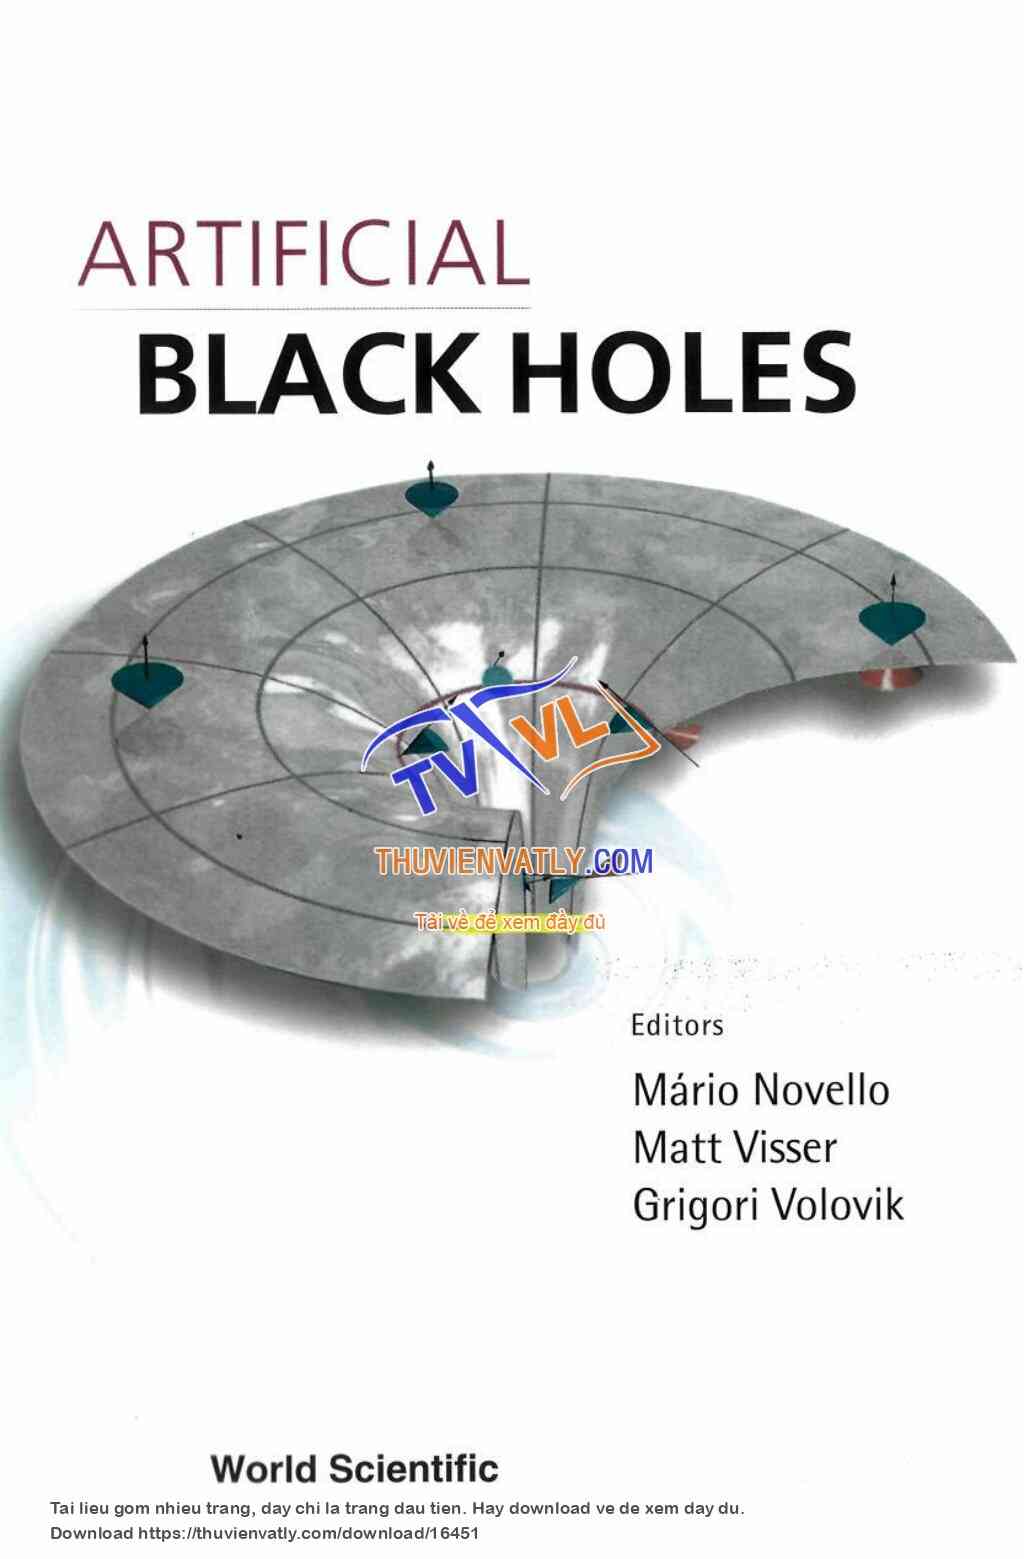 Artificial Black Holes (Mario Novello et al, World Scientific 2002)